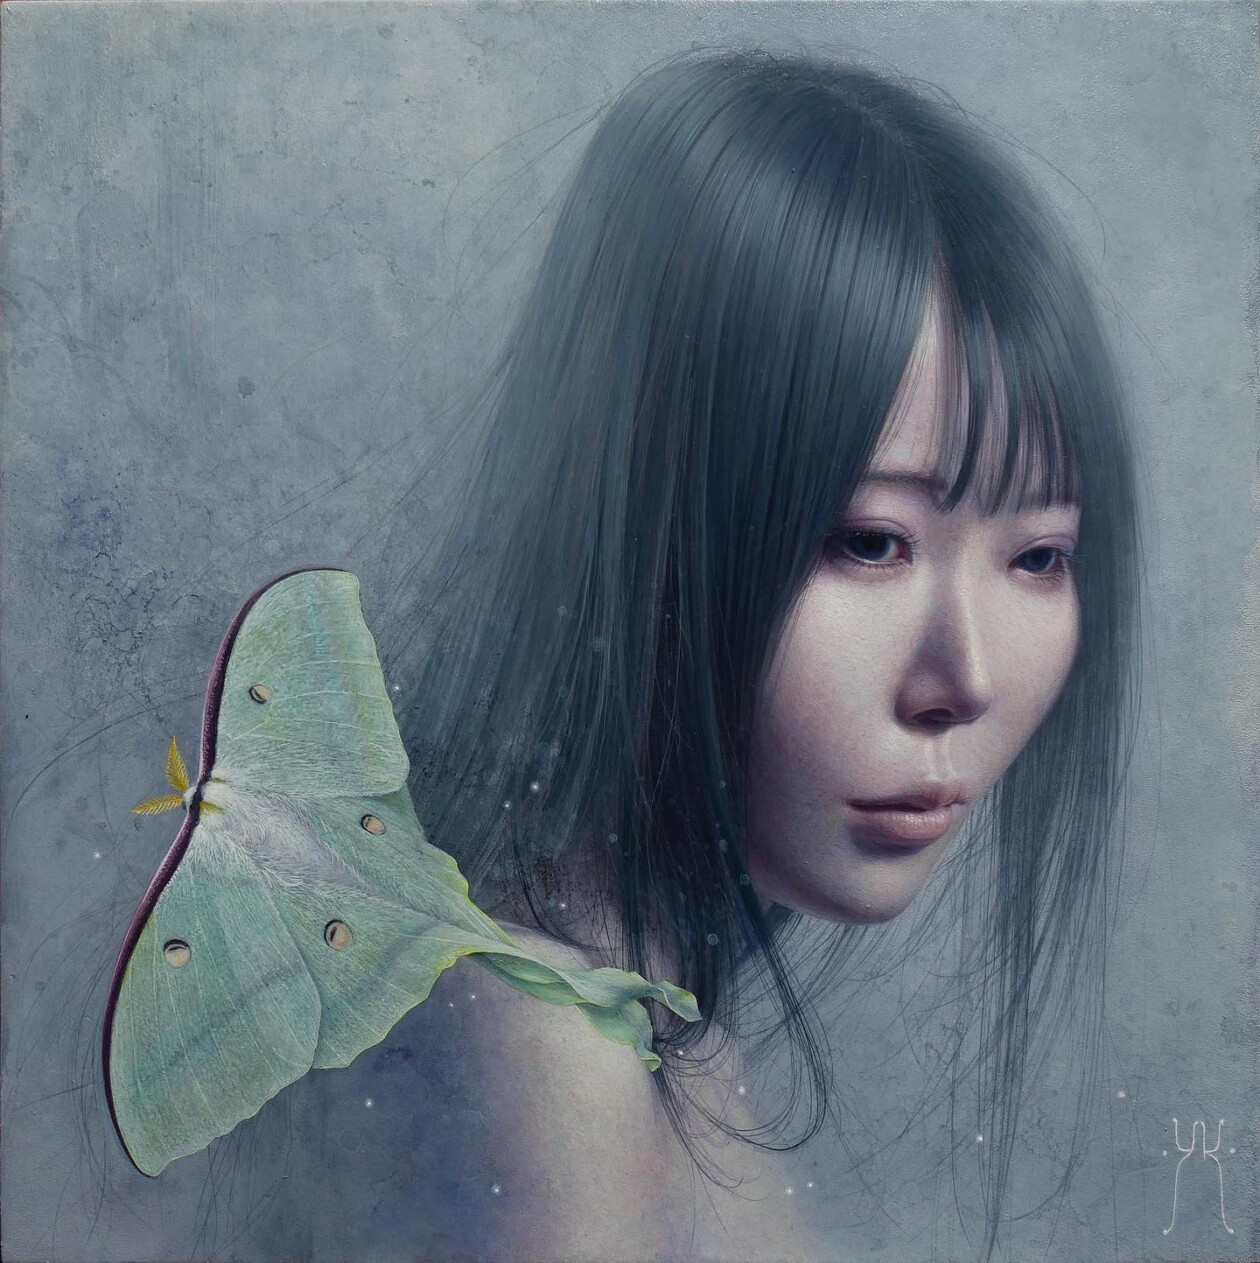 Capturing The Unseen, The Sublime Artistry Of Yosuke Kawashima (8)